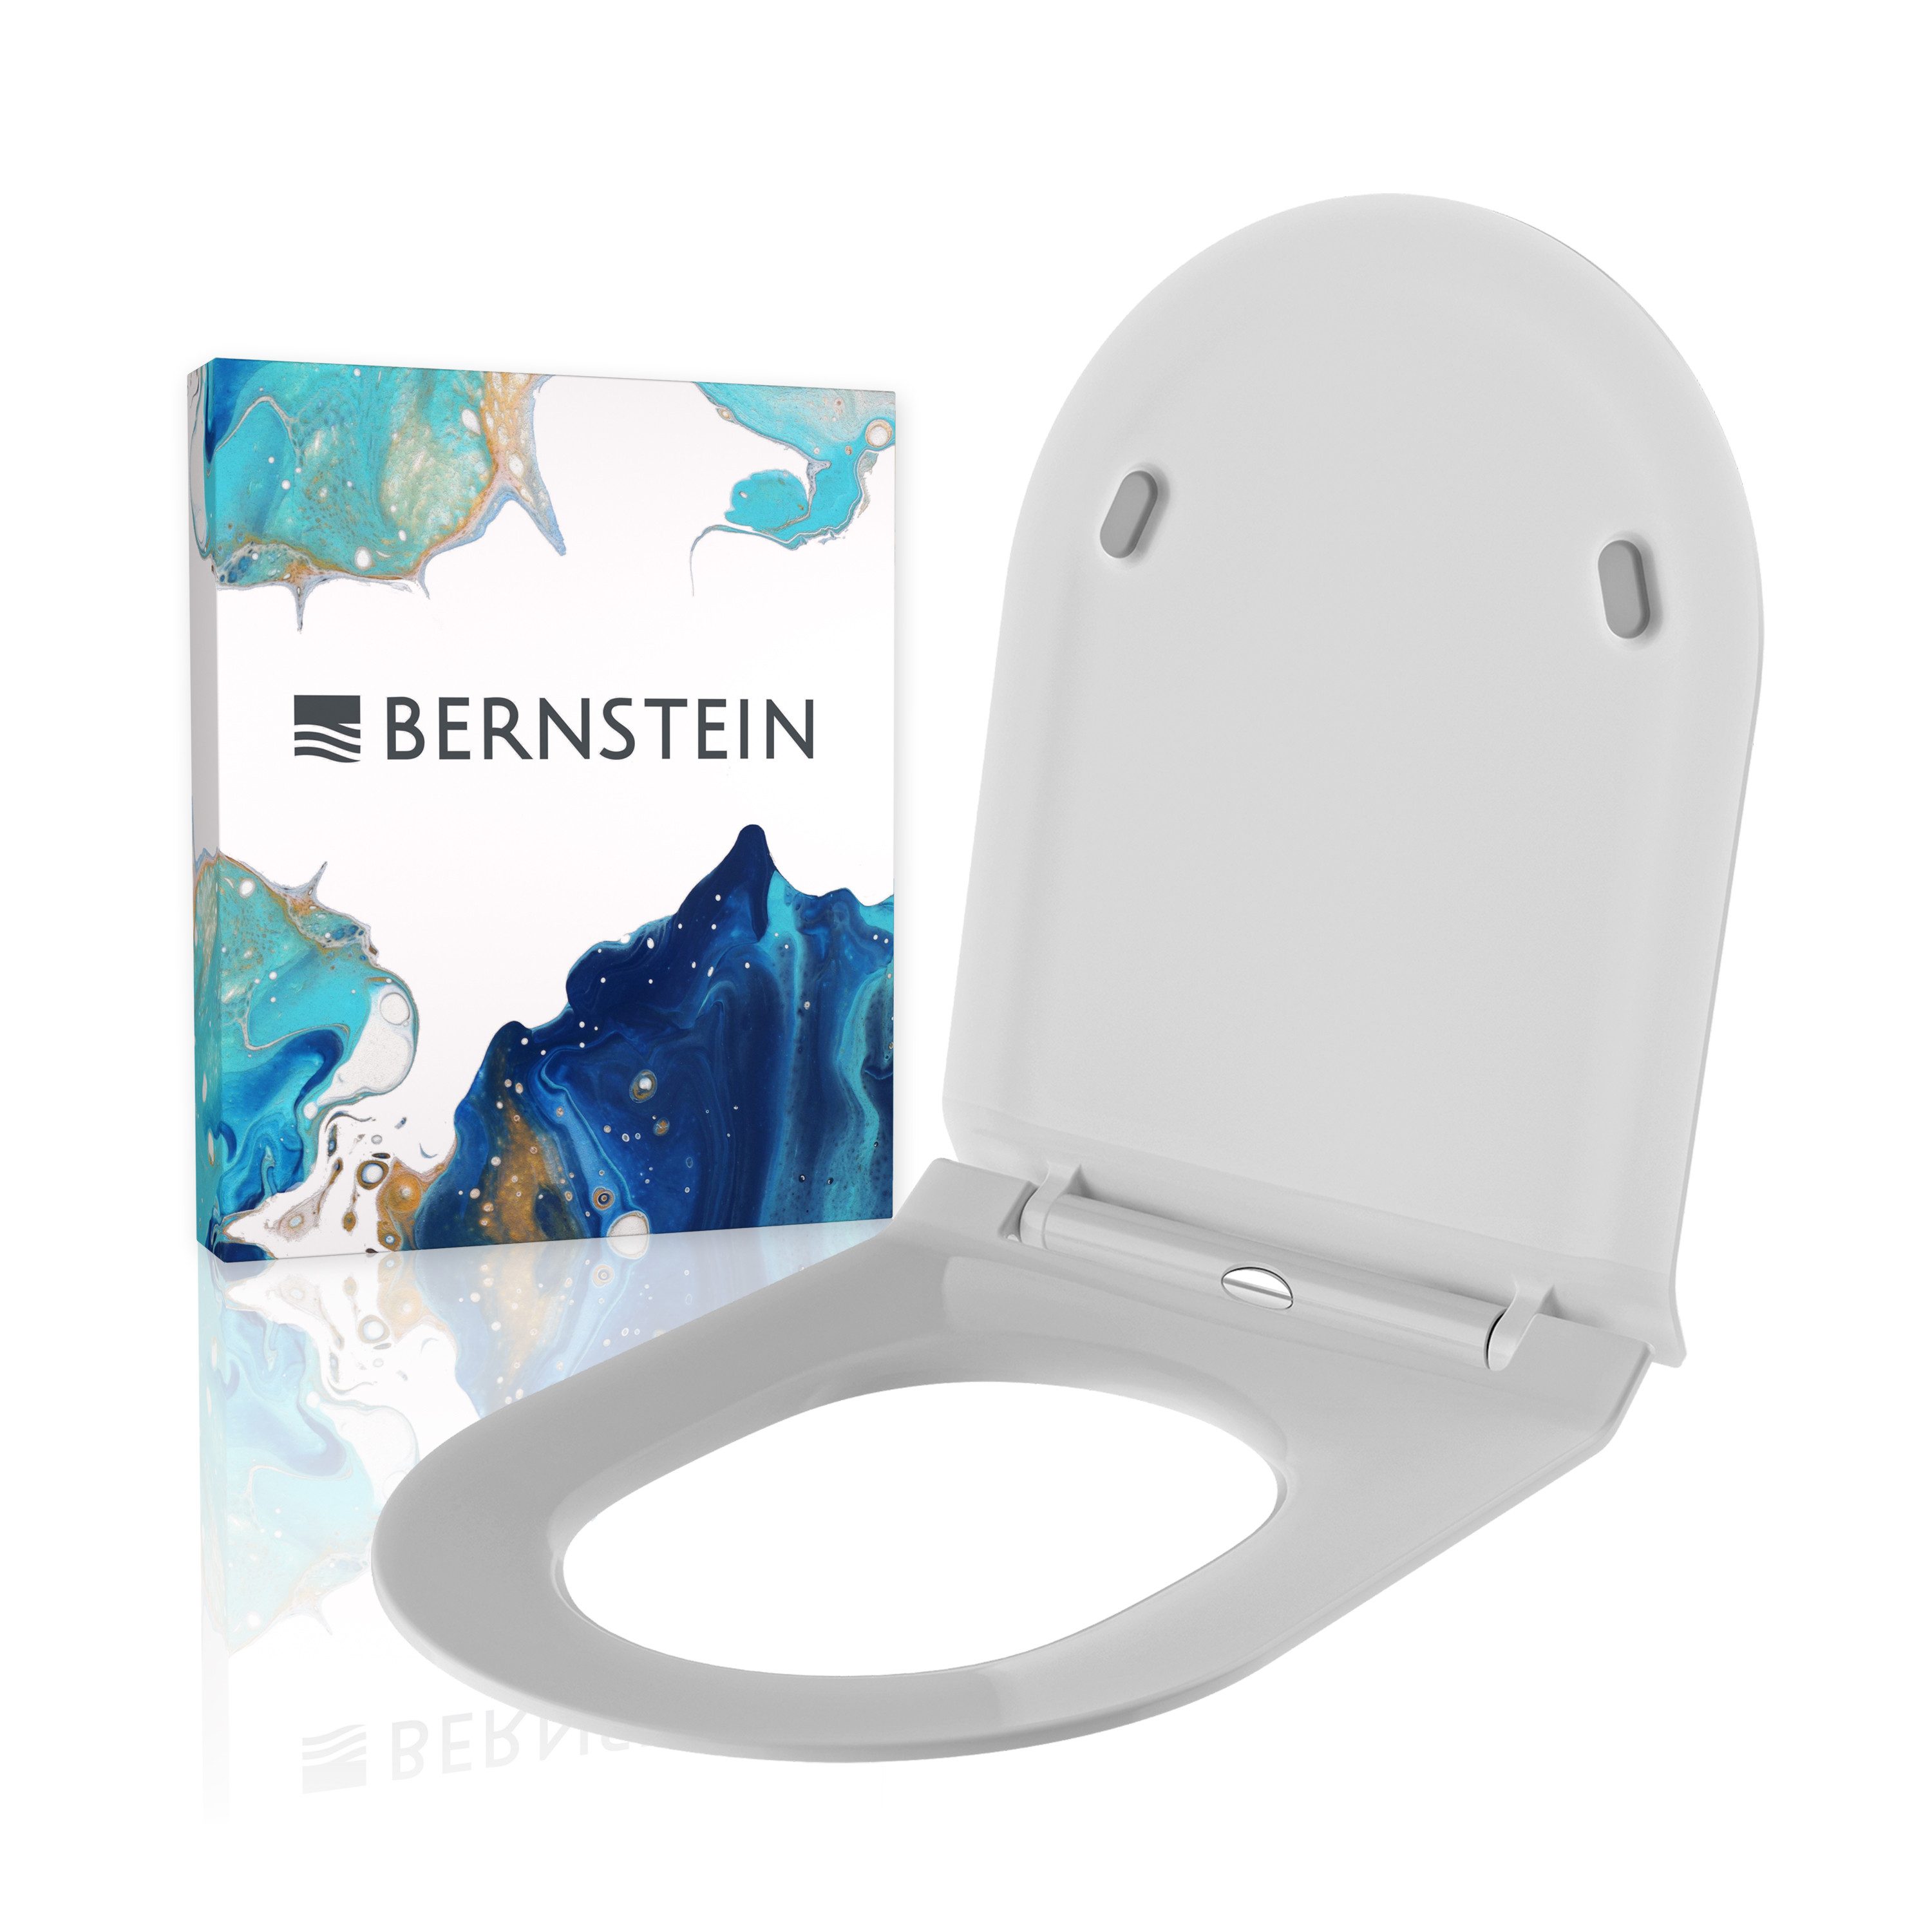 Bernstein WC-Sitz U2019 (Komplett-Set, inkl. Befestigungsmaterial), weiß / D-Form / Absenkautomatik / flach / abnehmbar / aus Duroplast